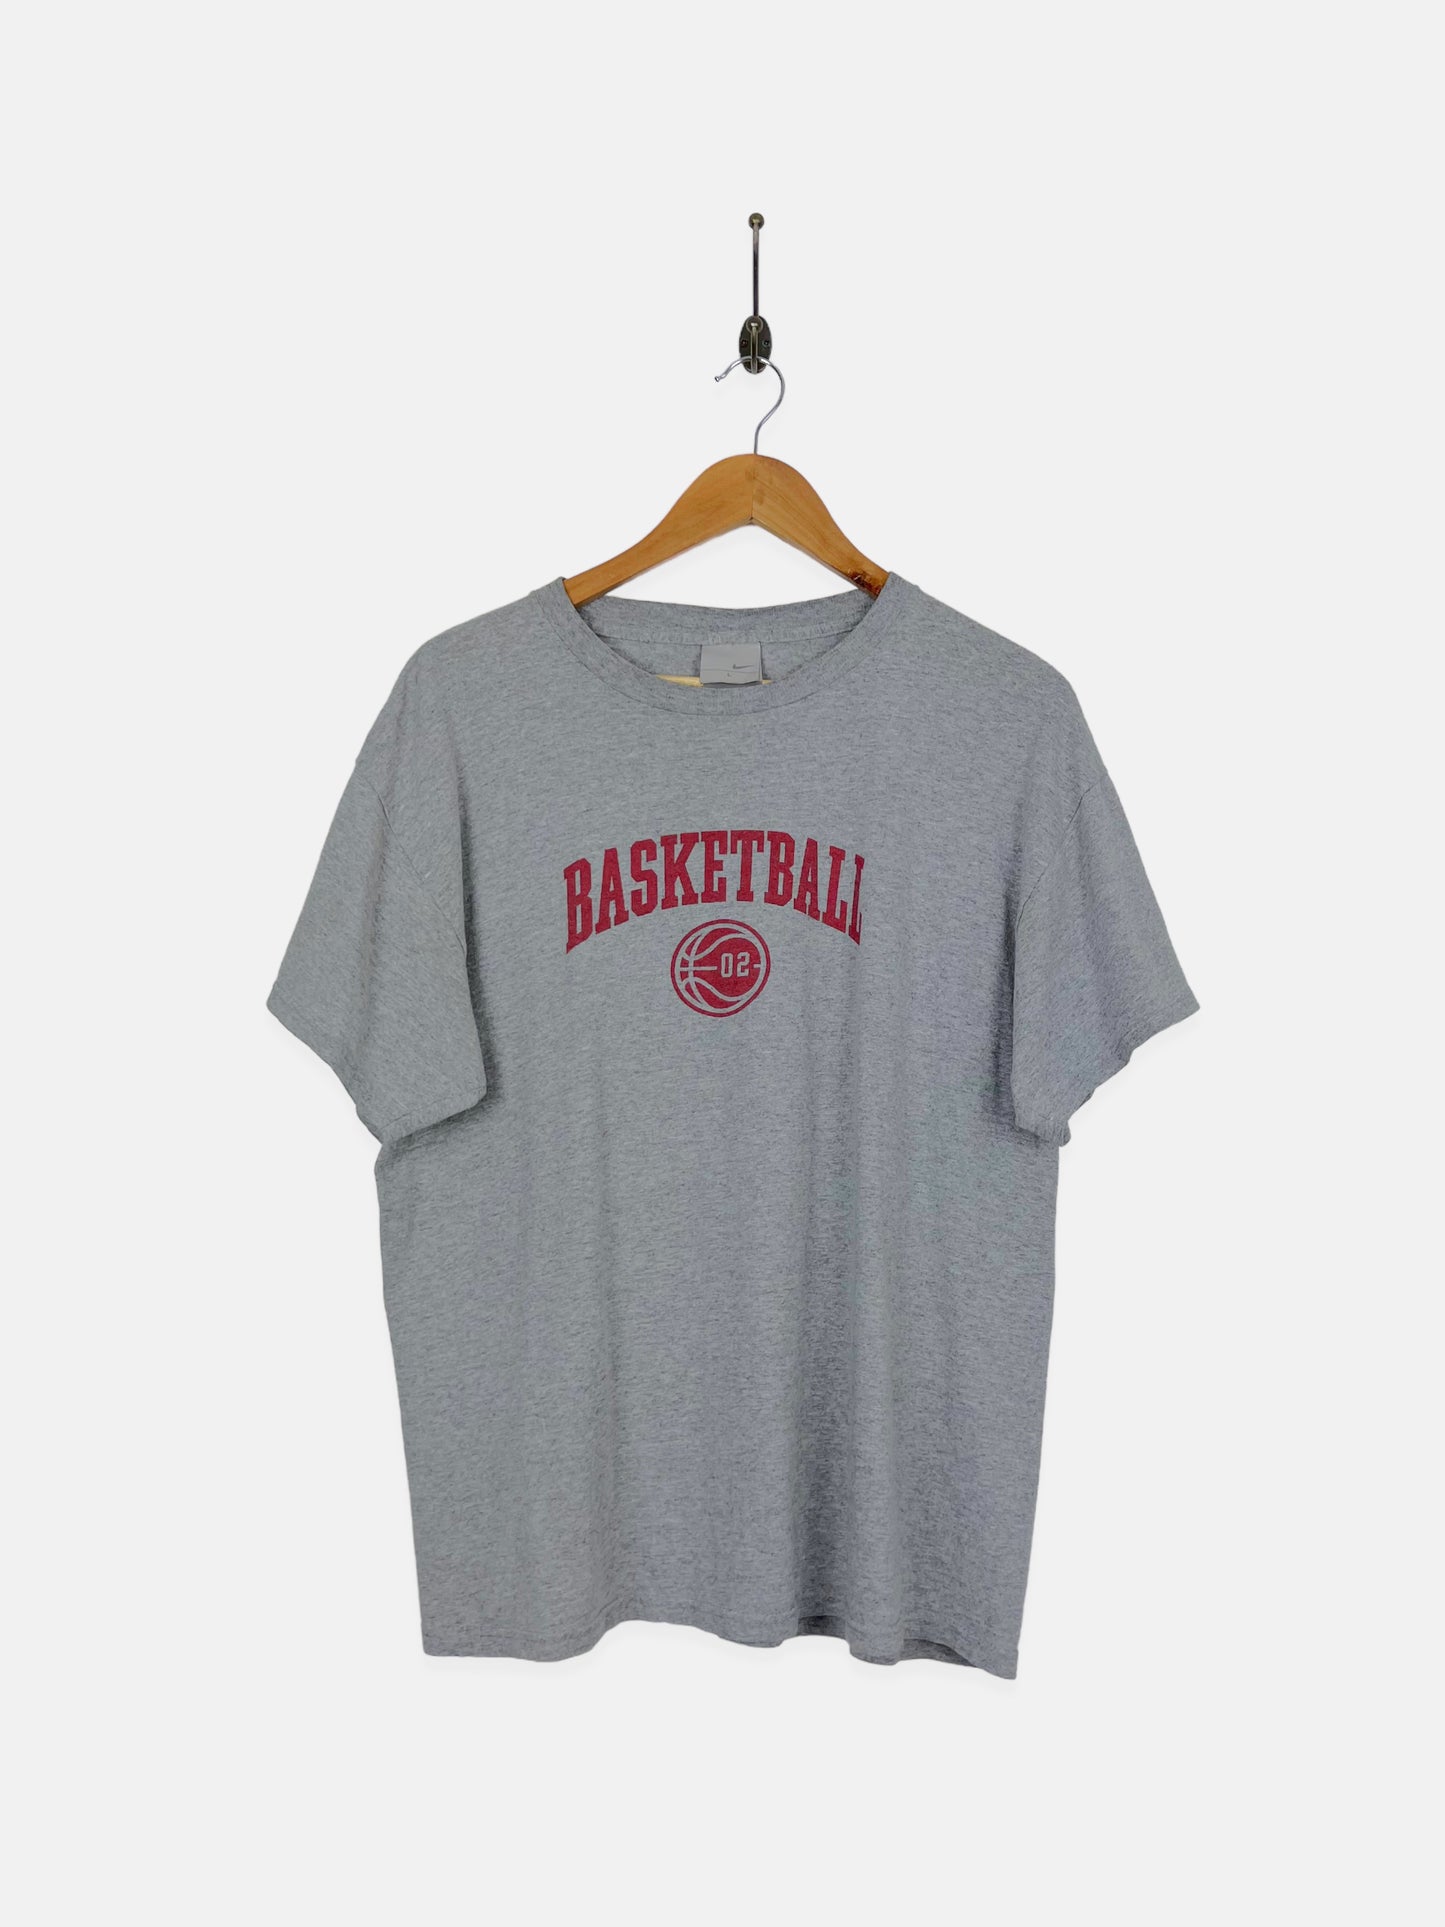 Nike Basketball 02 Vintage T-Shirt Size 14-16